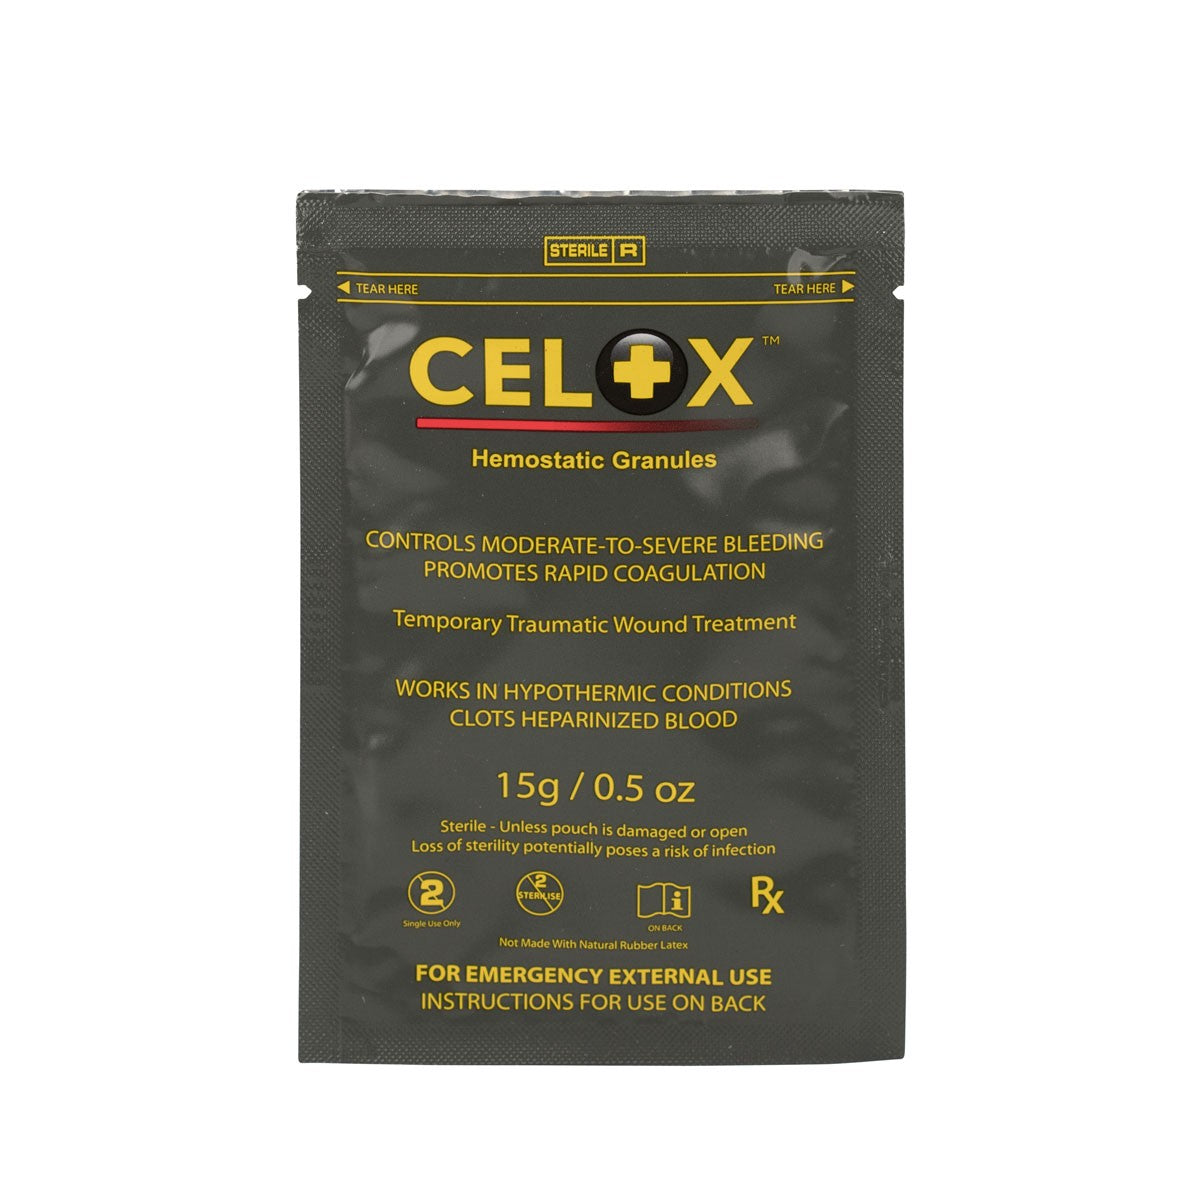 Celox Blood Clotting Agent, 15g Granules Pack - W-90773